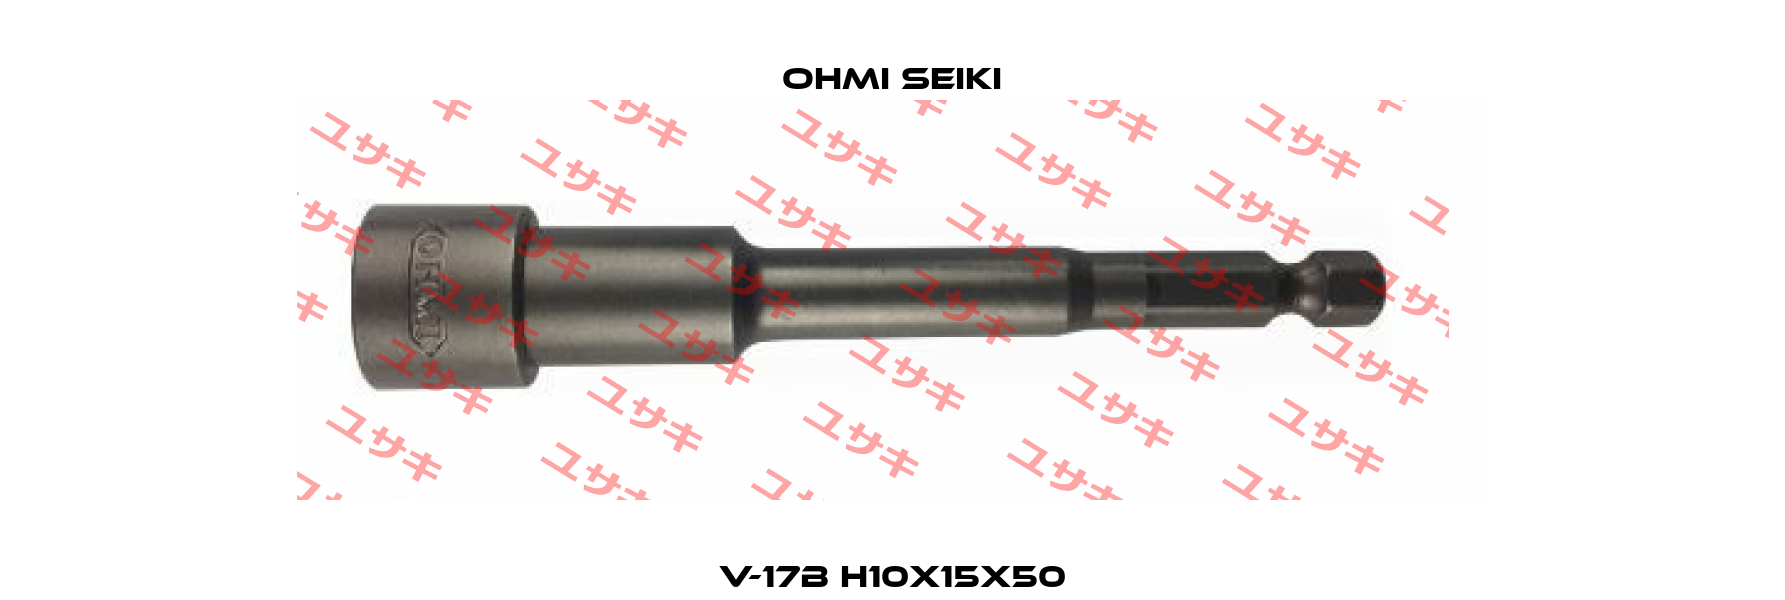 V-17B H10X15X50 Ohmi Seiki